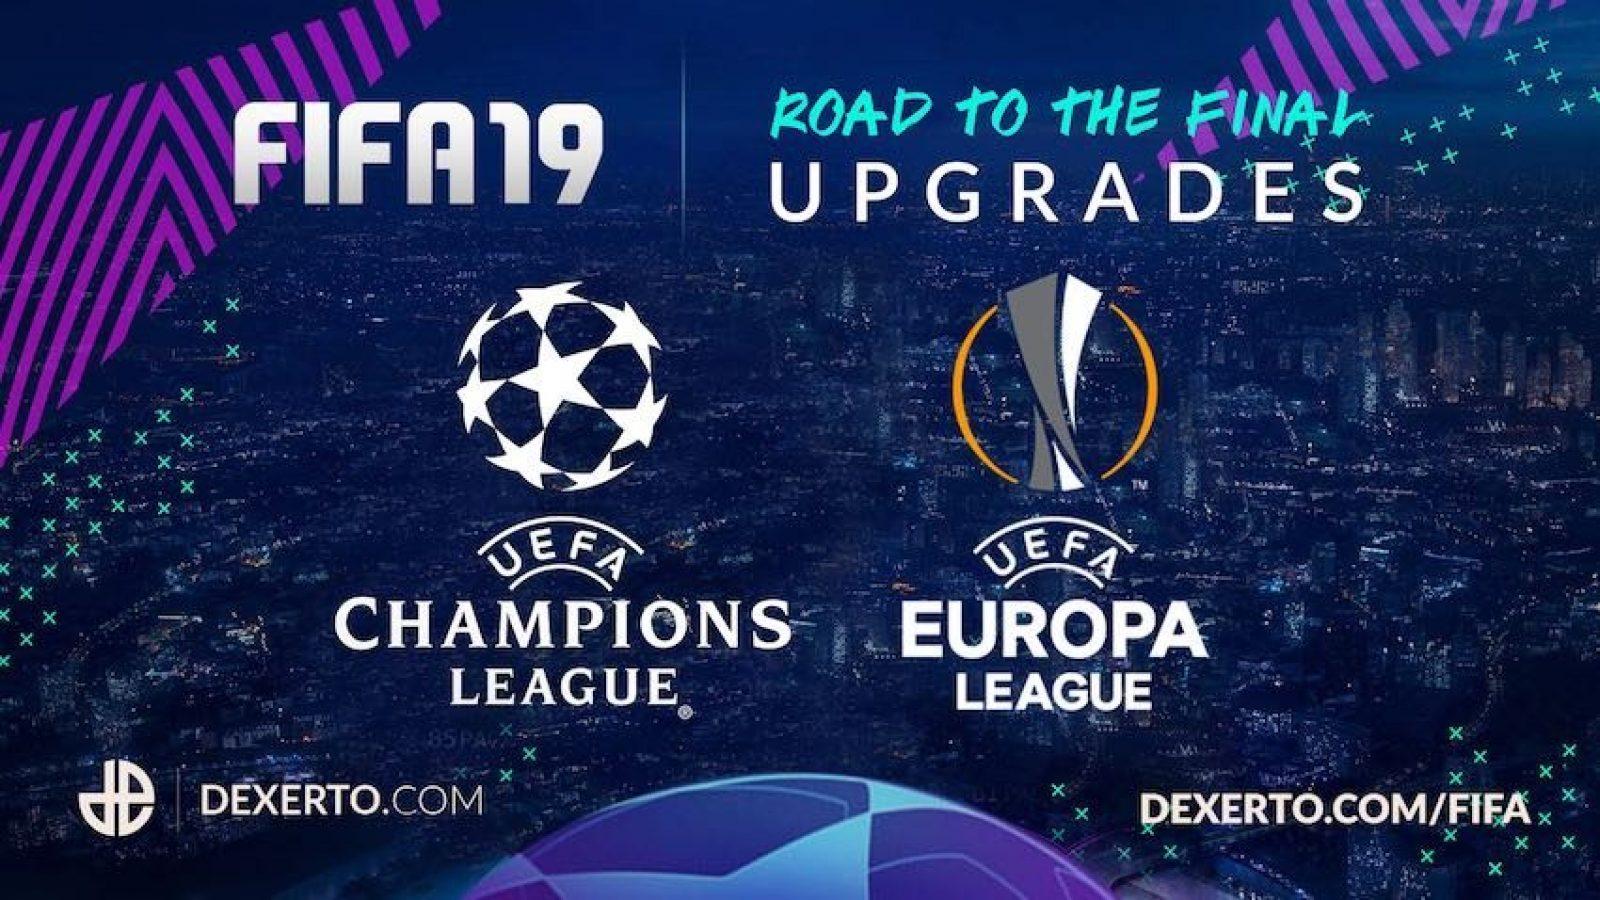 Itens da UEFA Champions League no FIFA 19 Ultimate Team